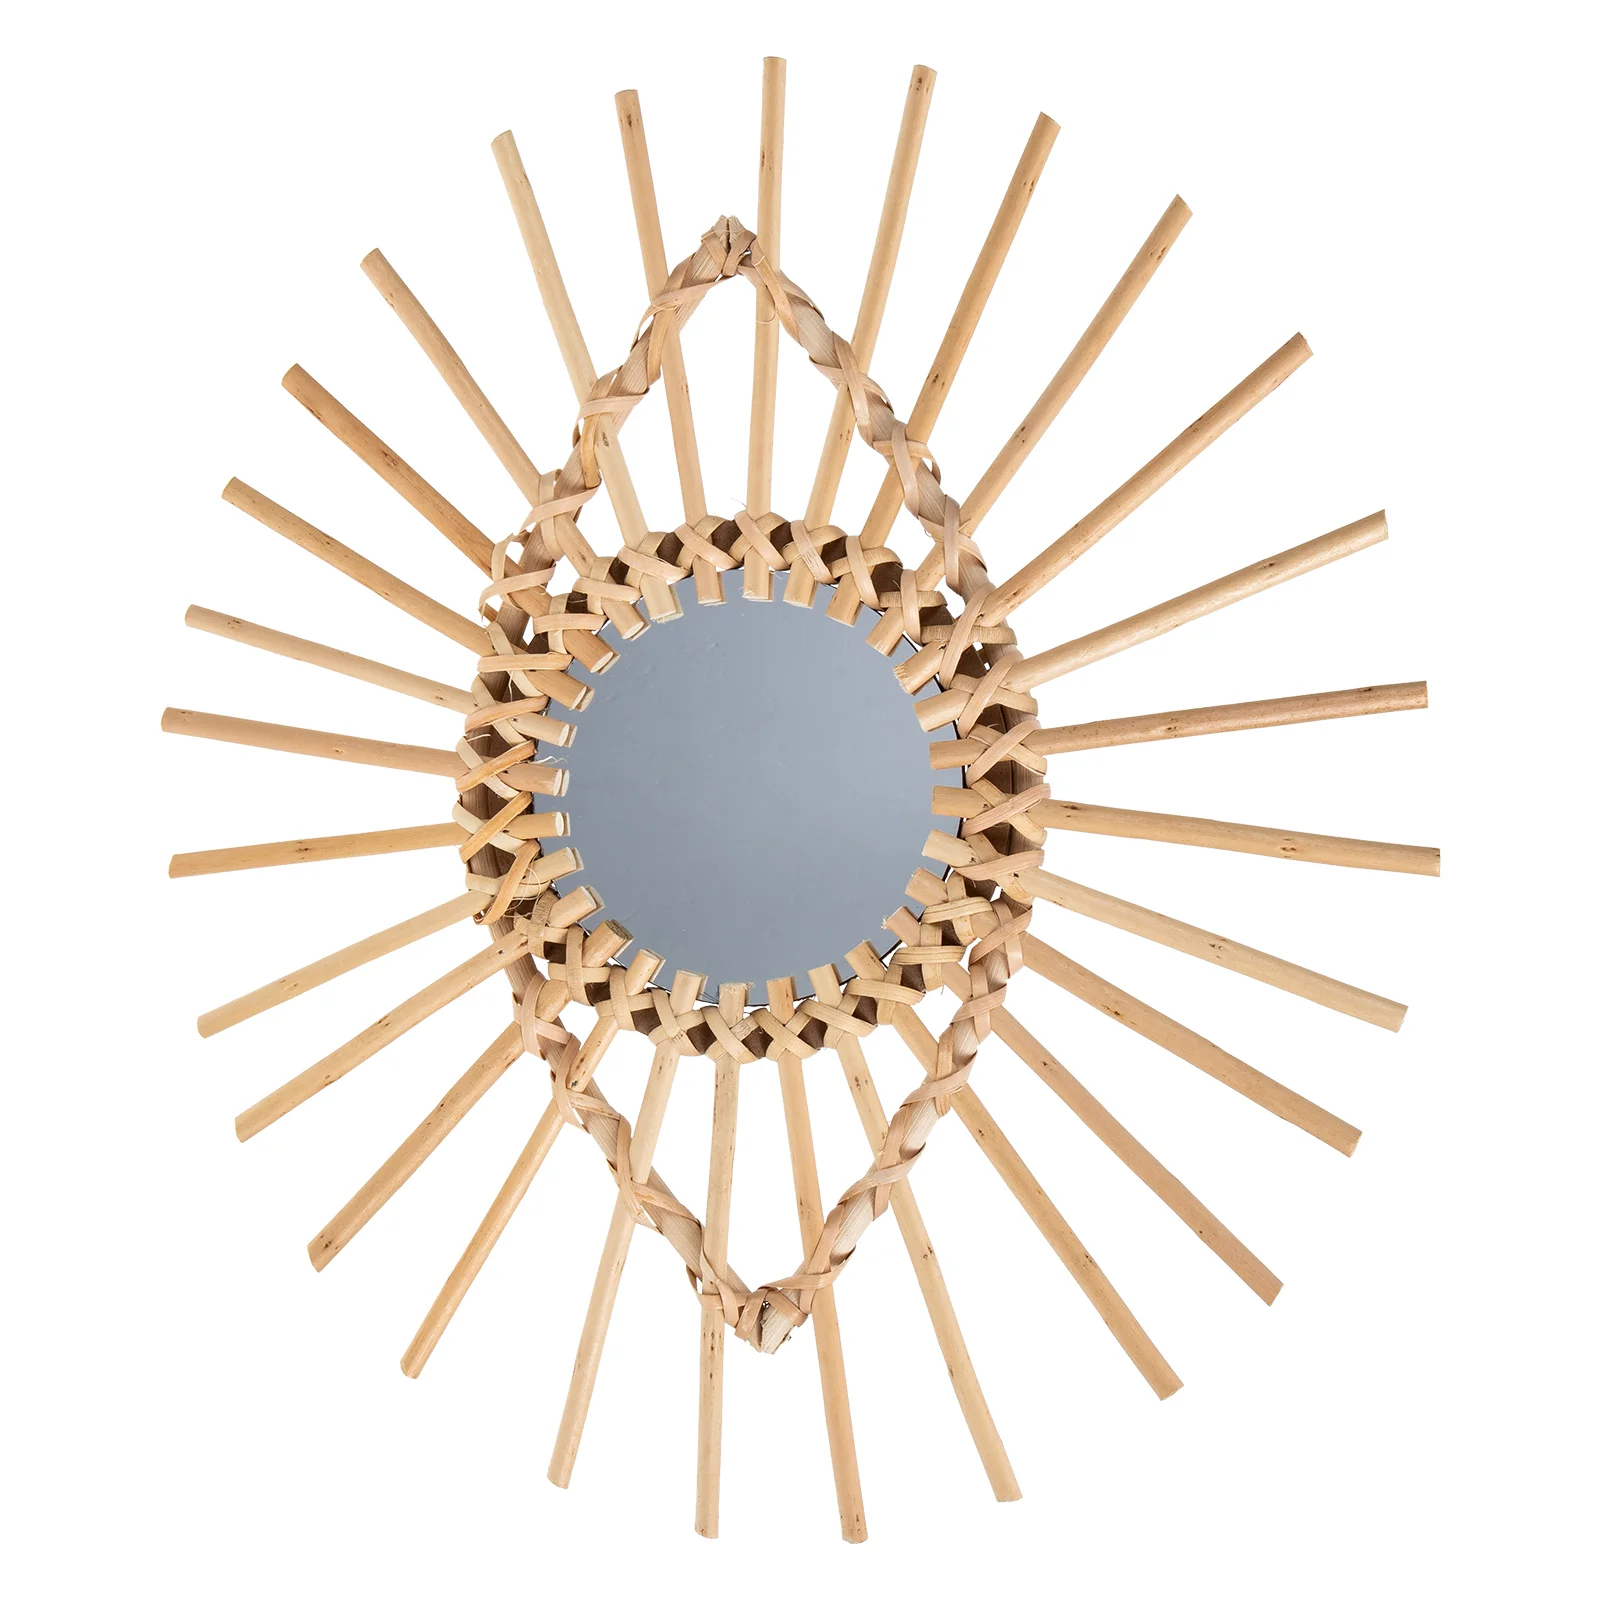 

Rattan Mirror Model Wall Pendant for Home Delicate Decor Glass Hanging Adornment Ornament